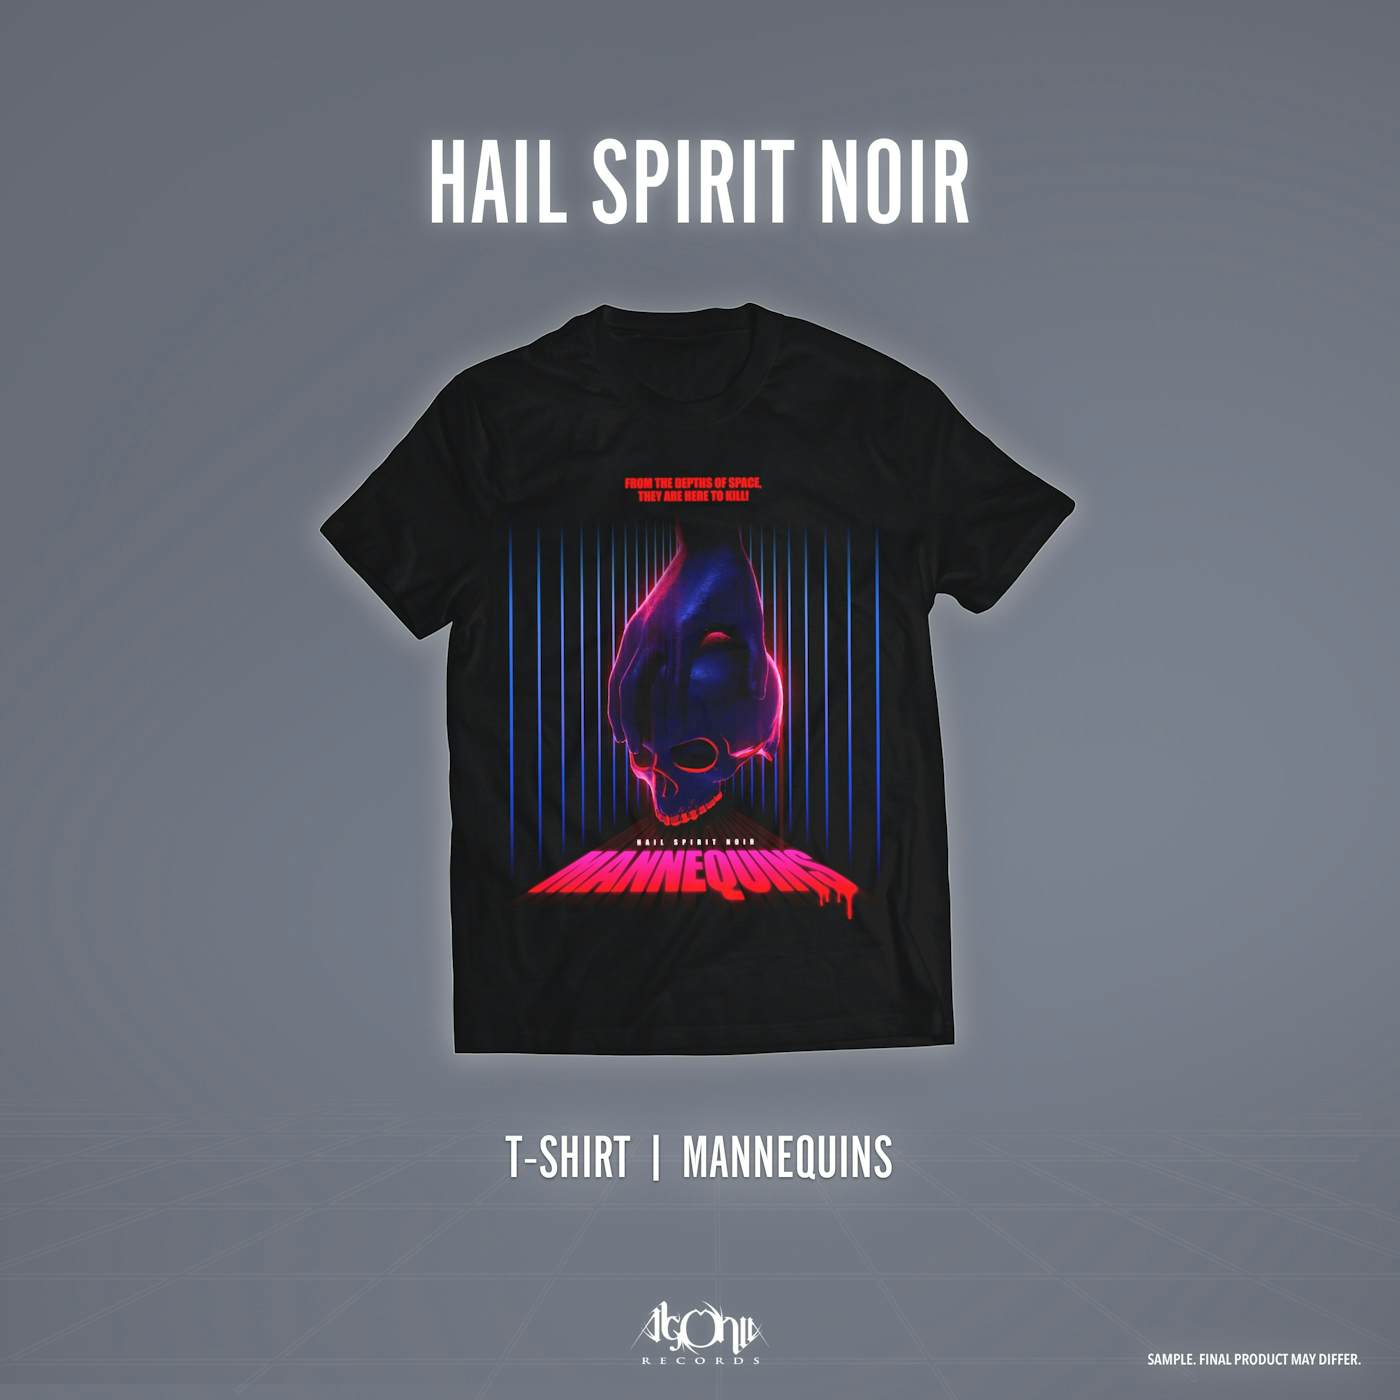 Hail Spirit Noir "Mannequins" Limited Edition T-Shirt